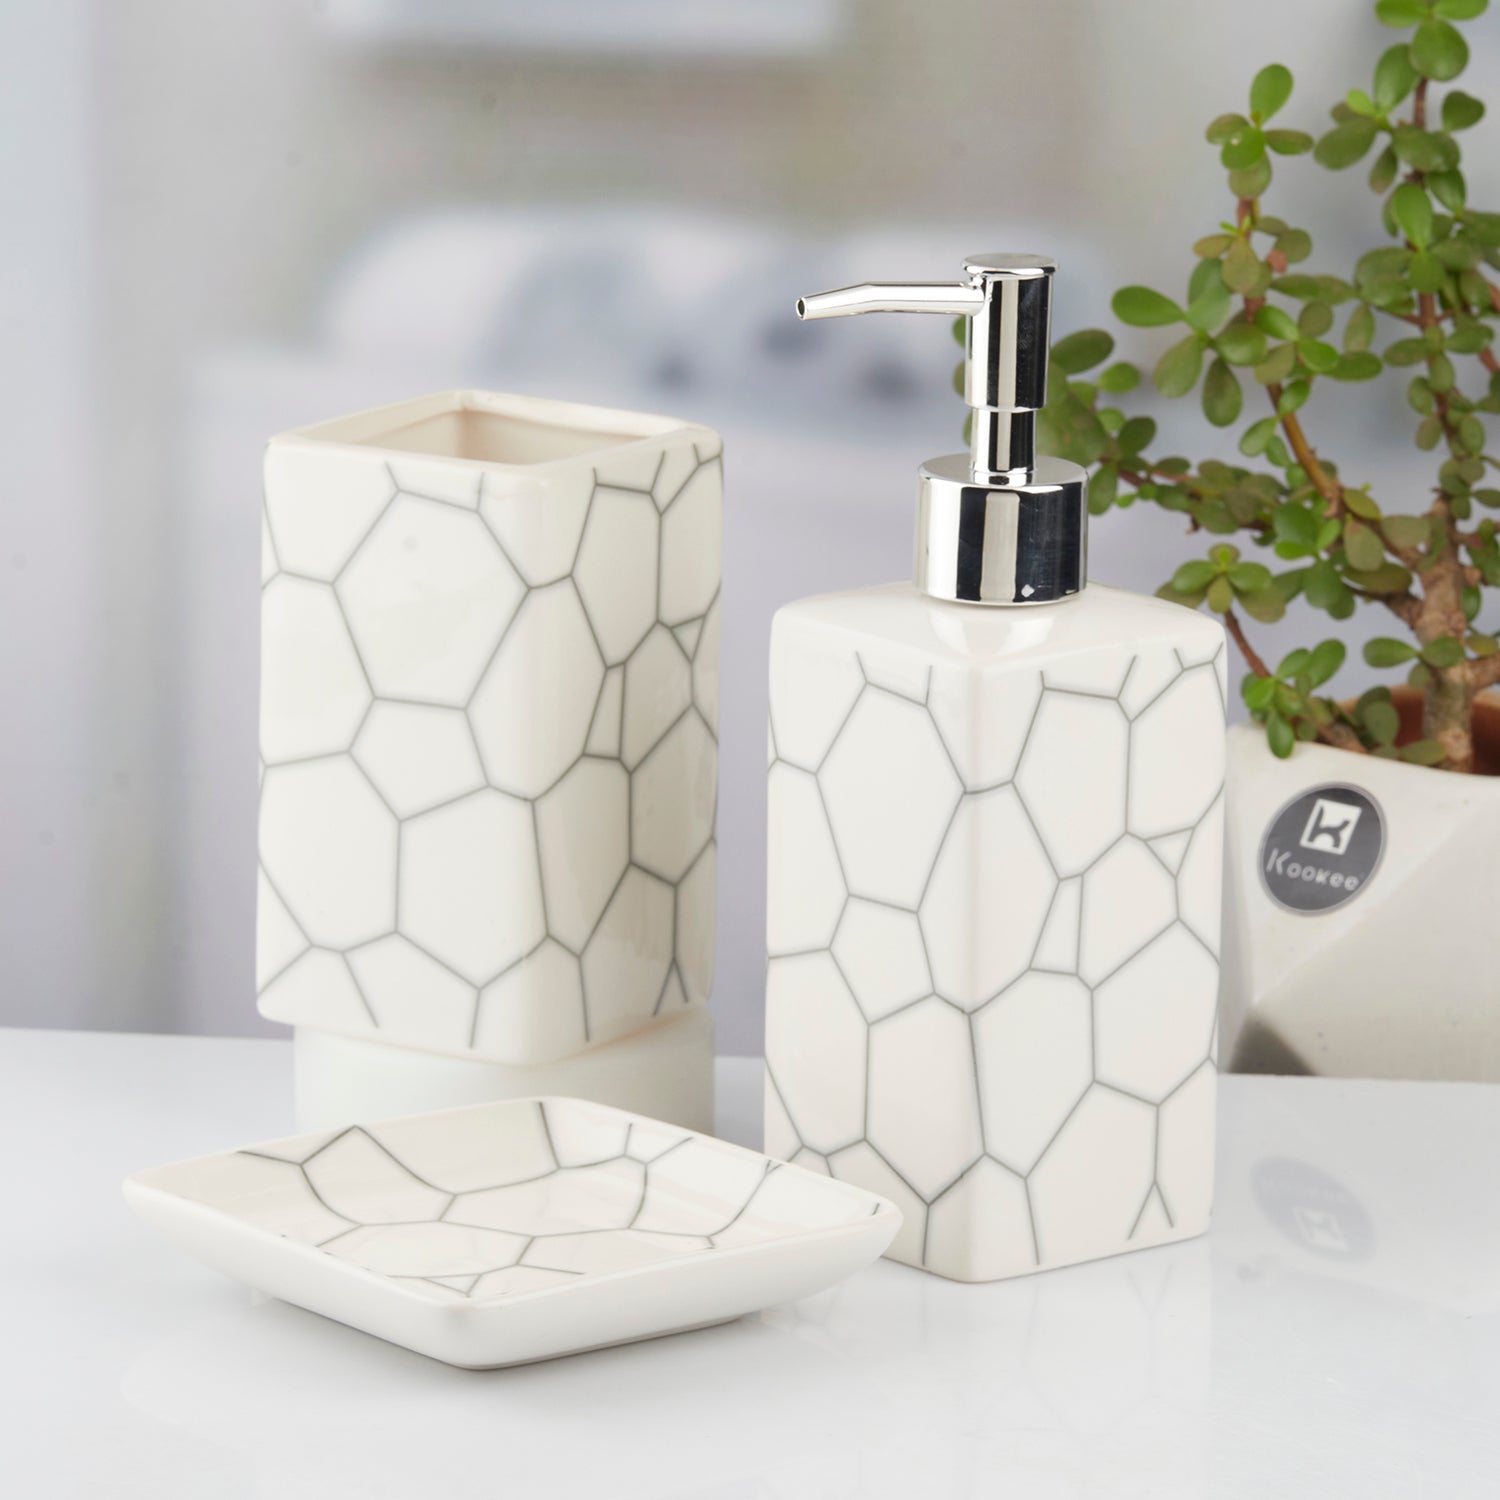 Ceramic Bathroom Set of 3 with Soap Dispenser (10433)